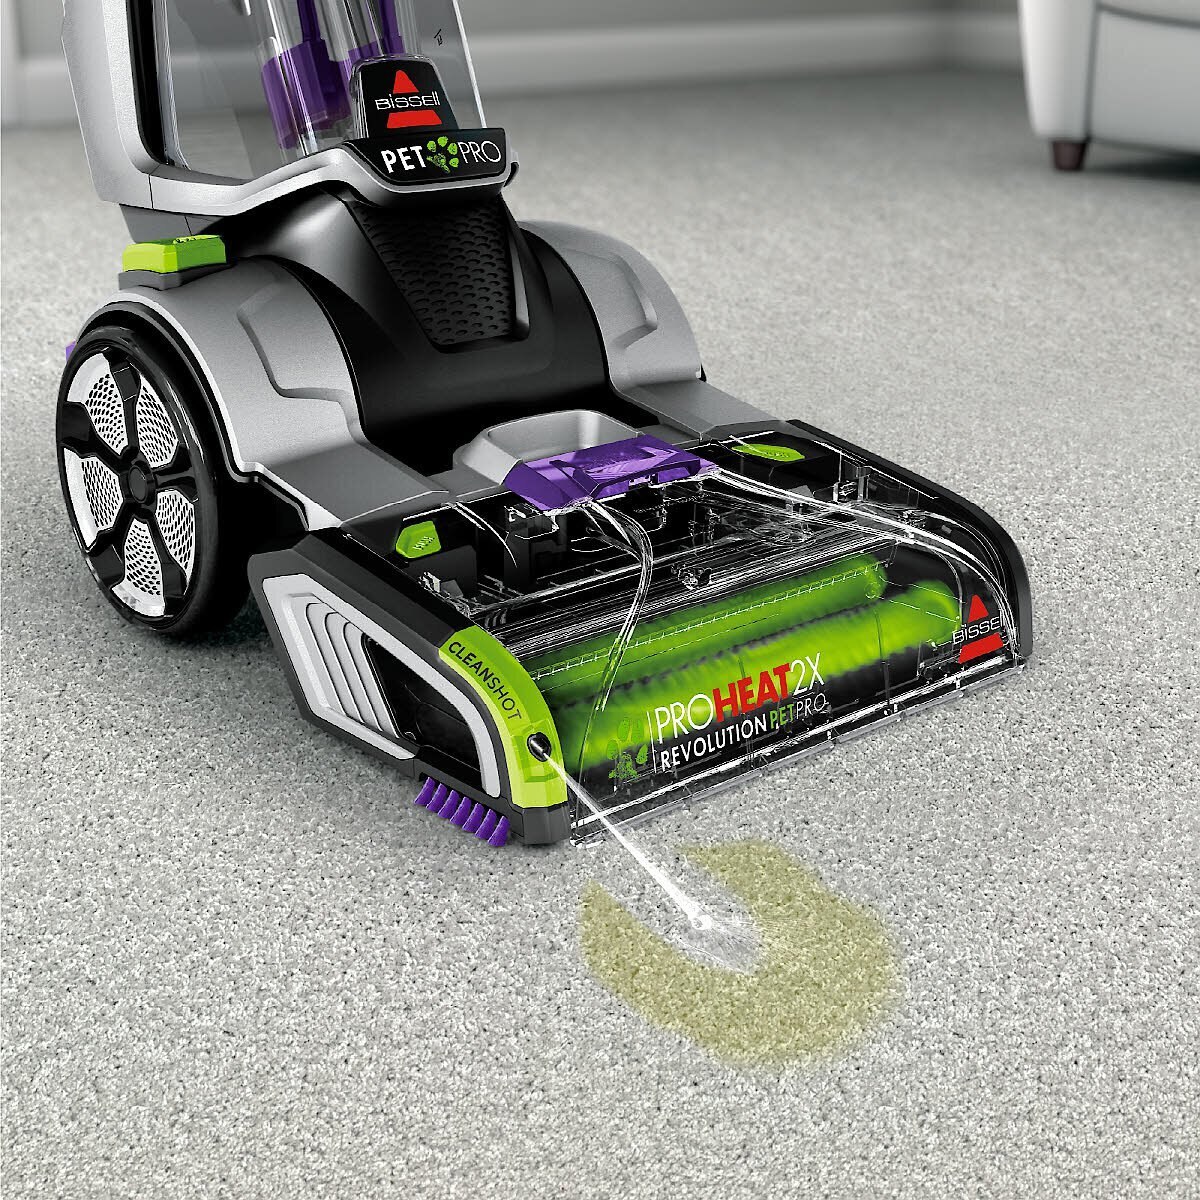 Bissell ProHeat 2X Revolution Pet Pro Carpet Cleaner, Purple, Large